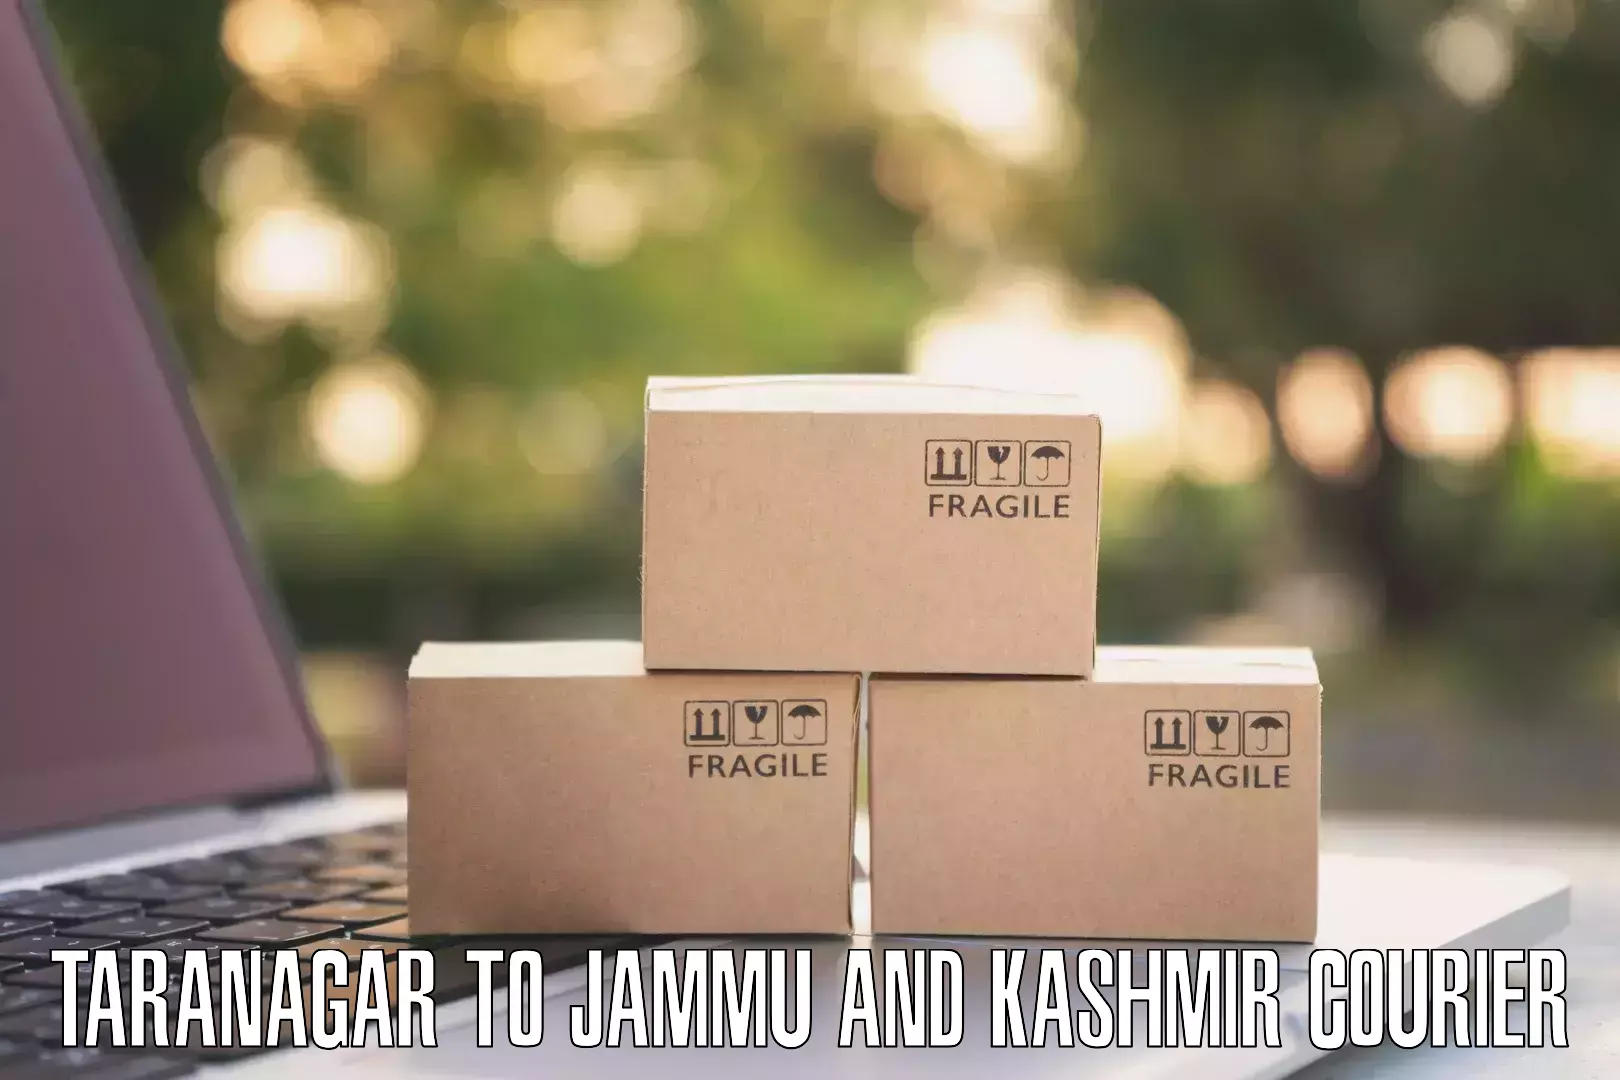 Custom courier packaging Taranagar to Srinagar Kashmir